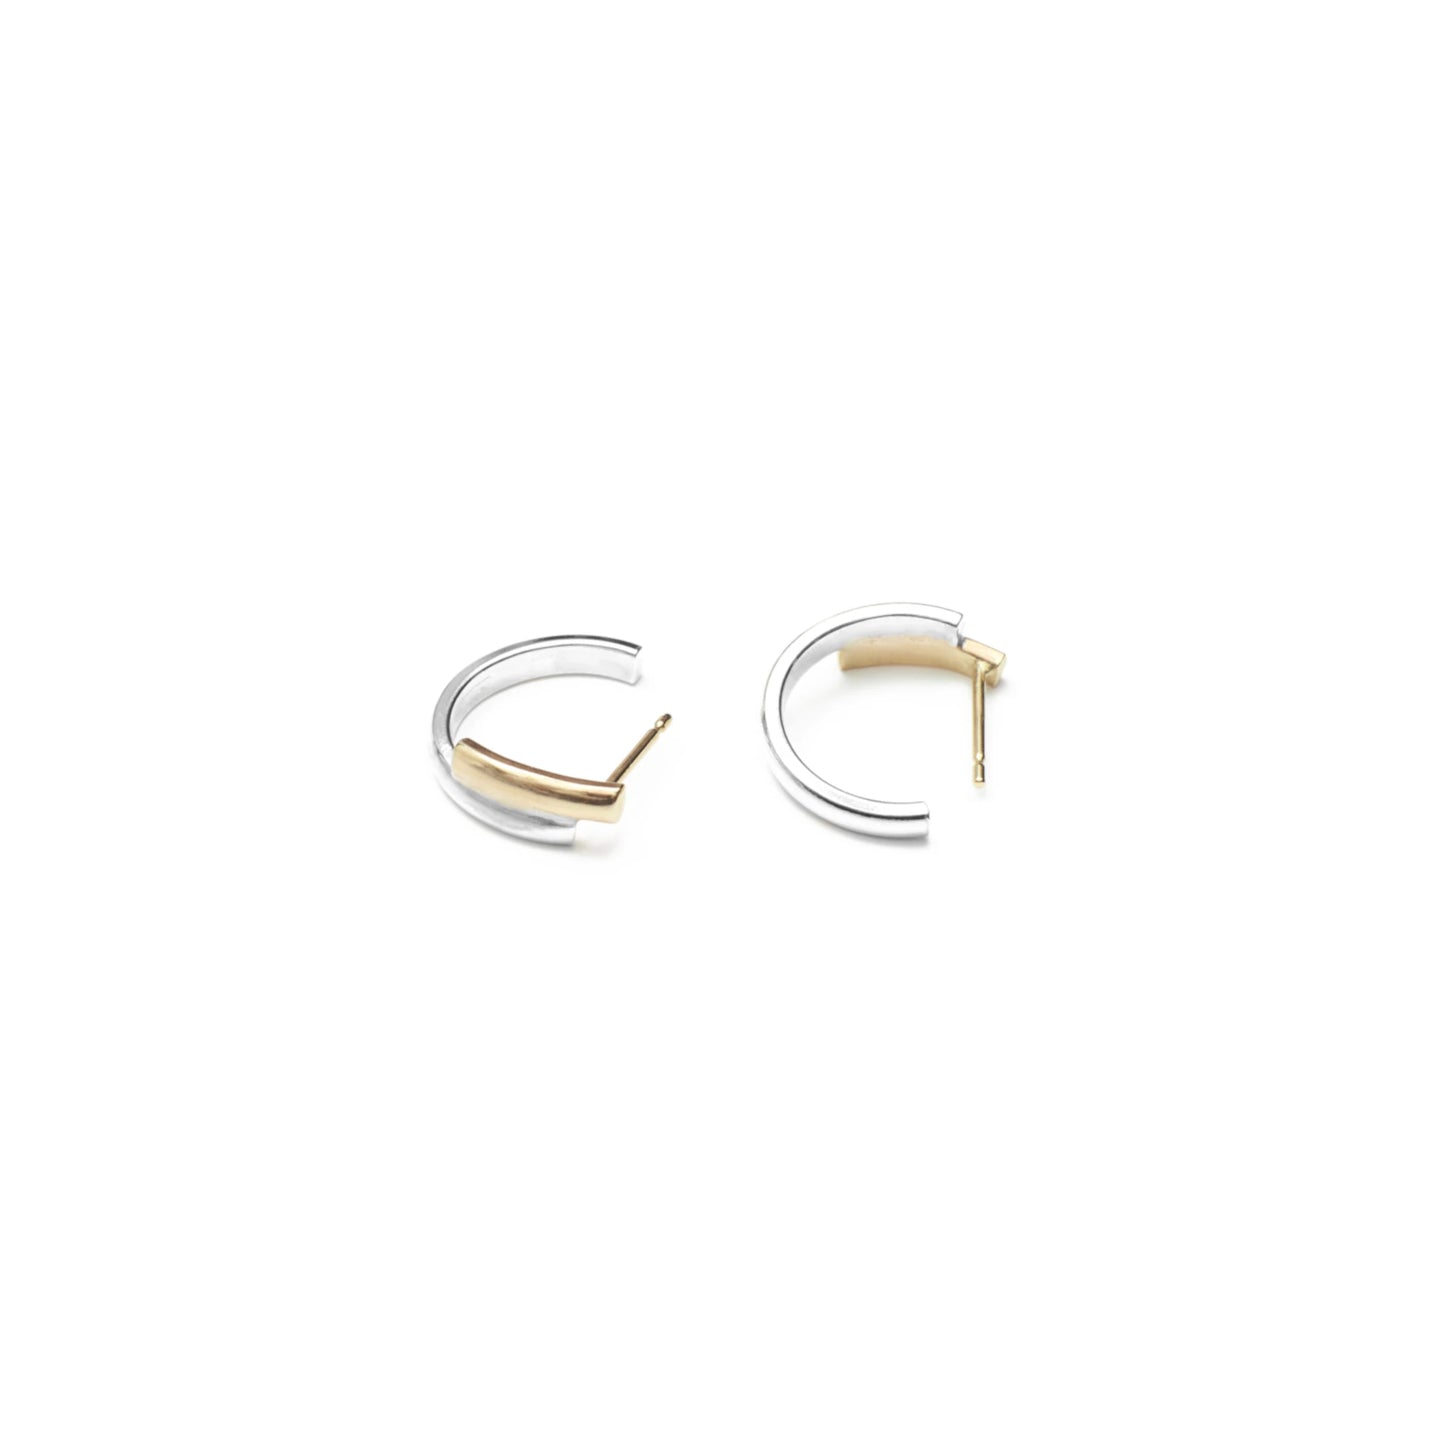 Duet Hoop Earrings - 9kt Gold & Sterling Silver